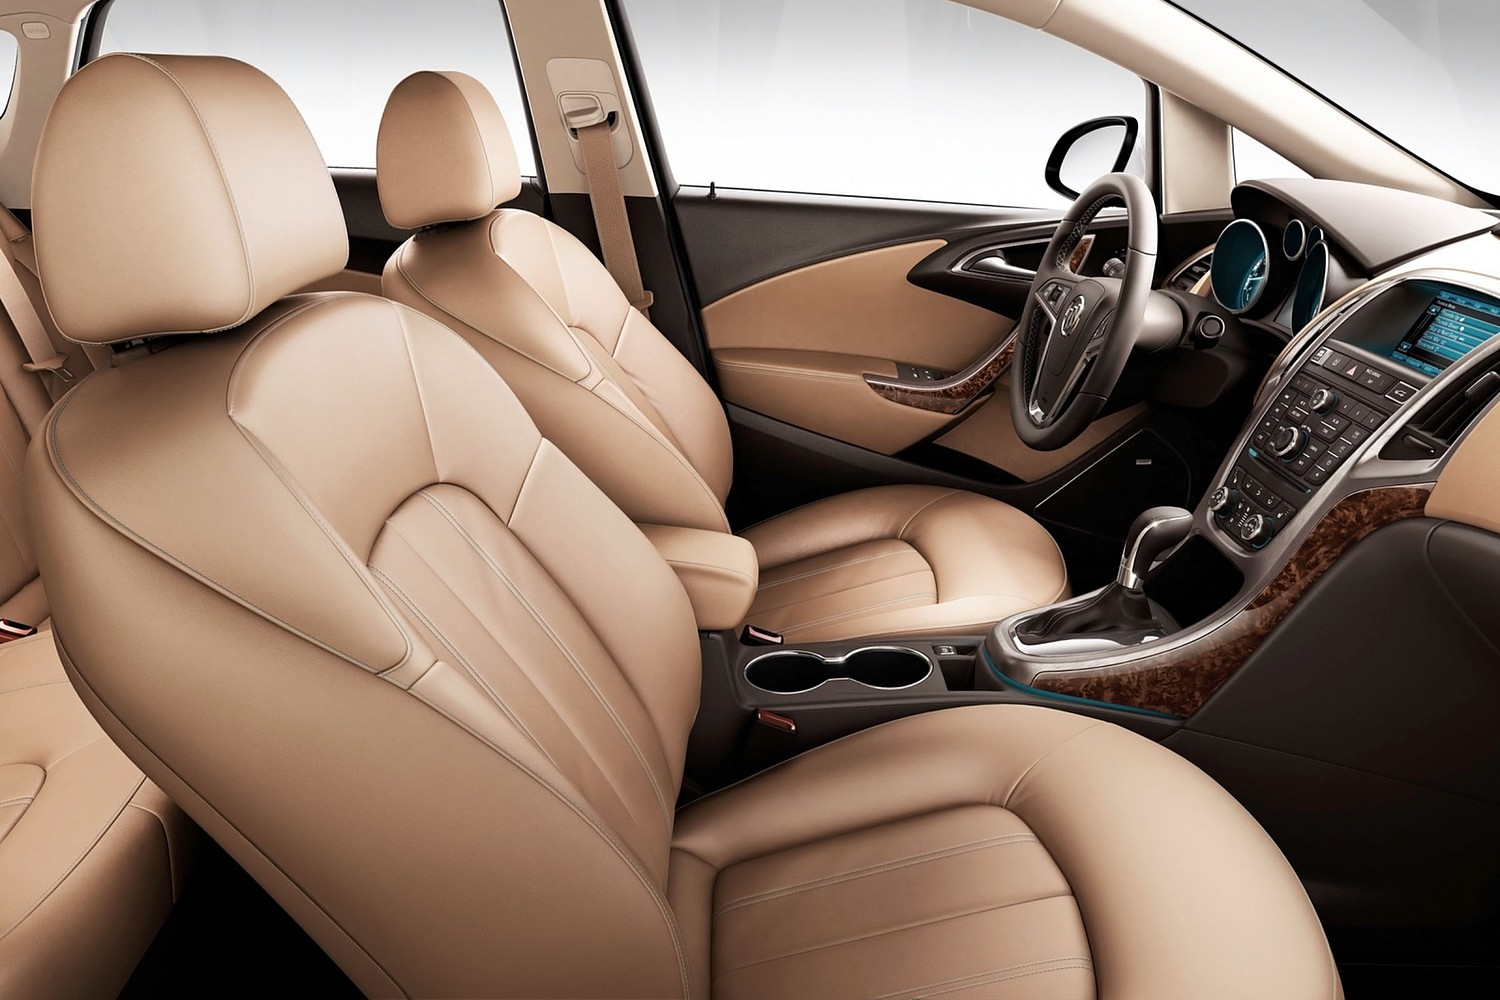 Buick Verano Sedan Interior (2013 model year shown)